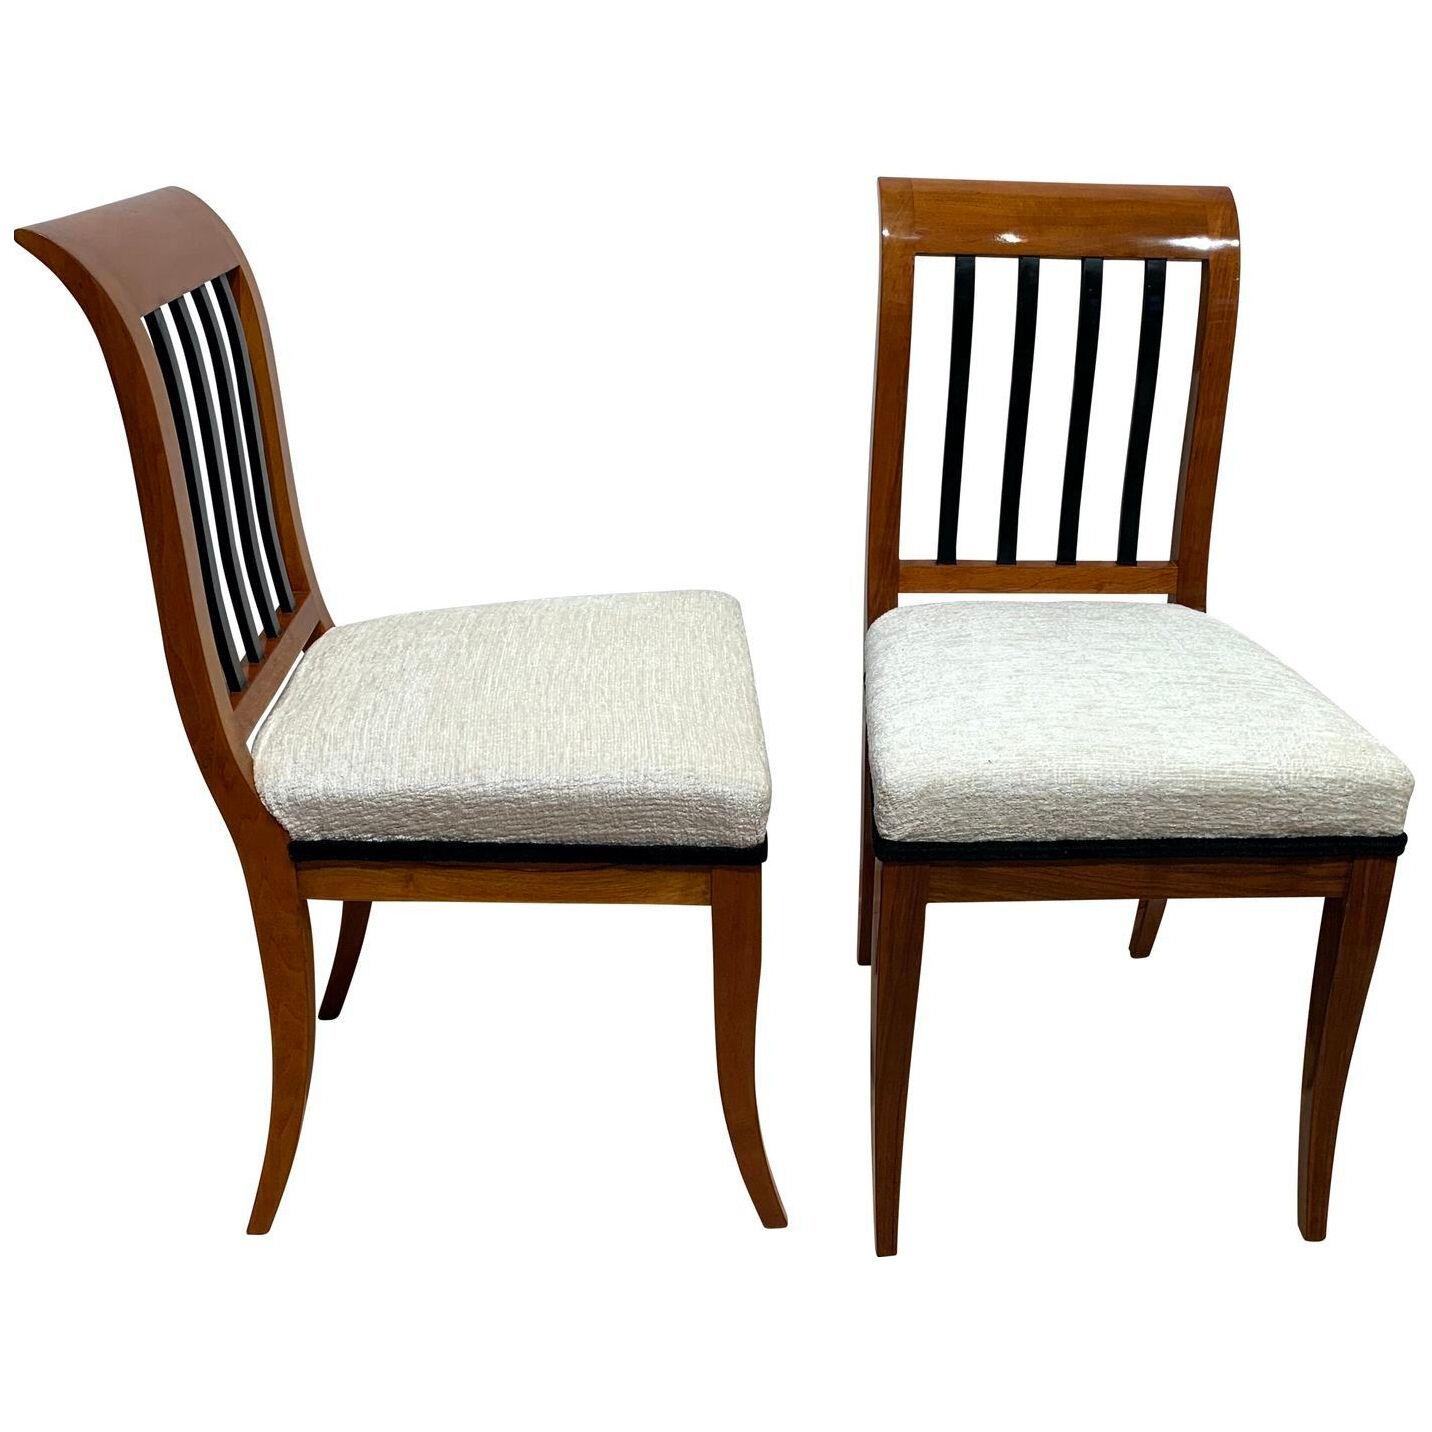 Pair of Biedermeier Side Chairs, Solid Walnut, Franconia, Germany circa 1825